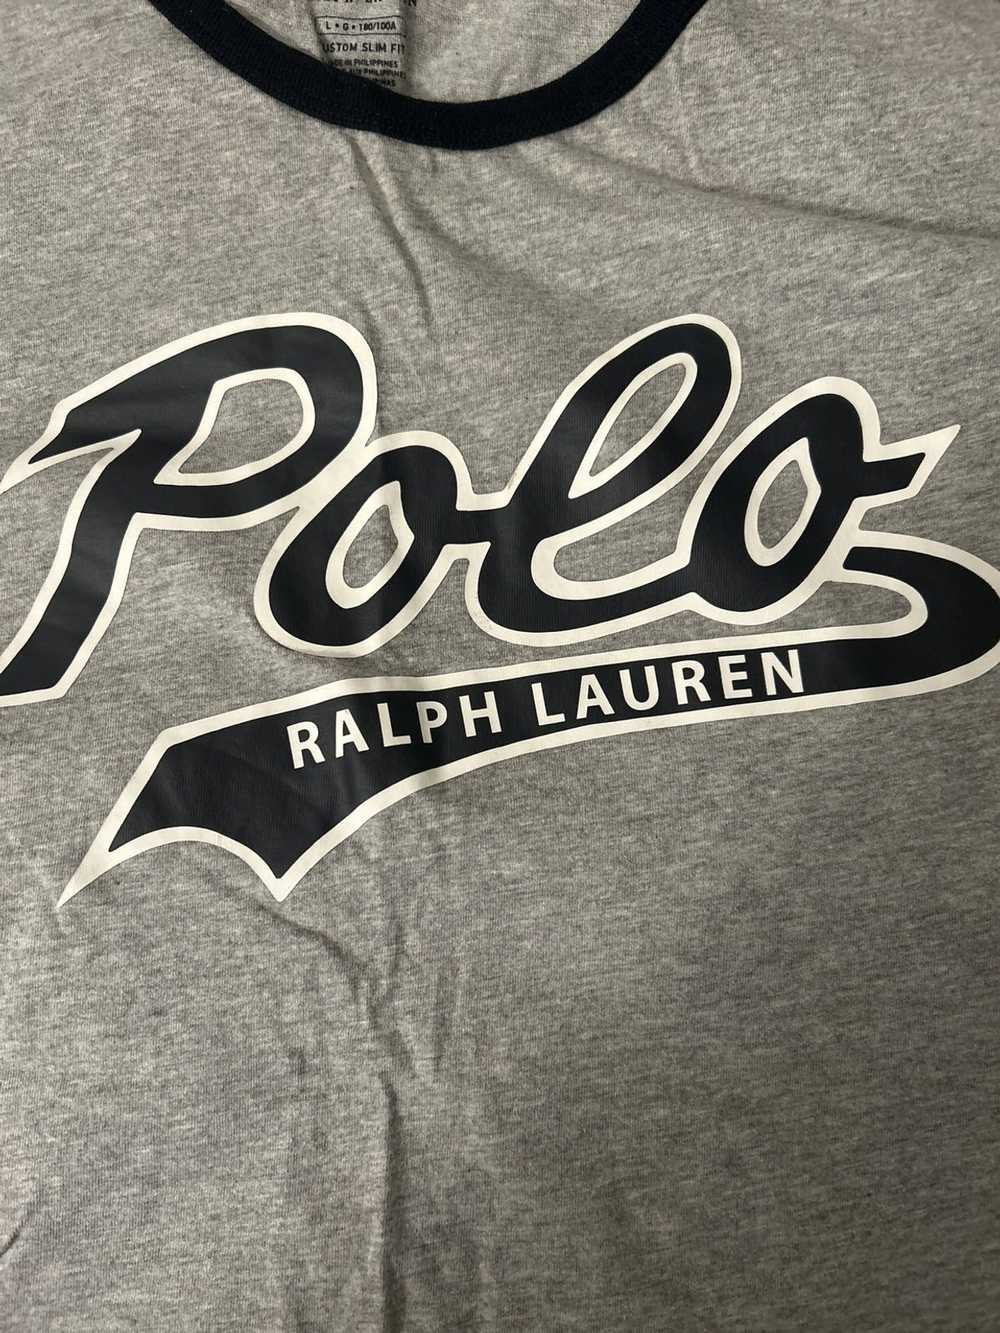 Polo Ralph Lauren Polo T Shirt - image 2